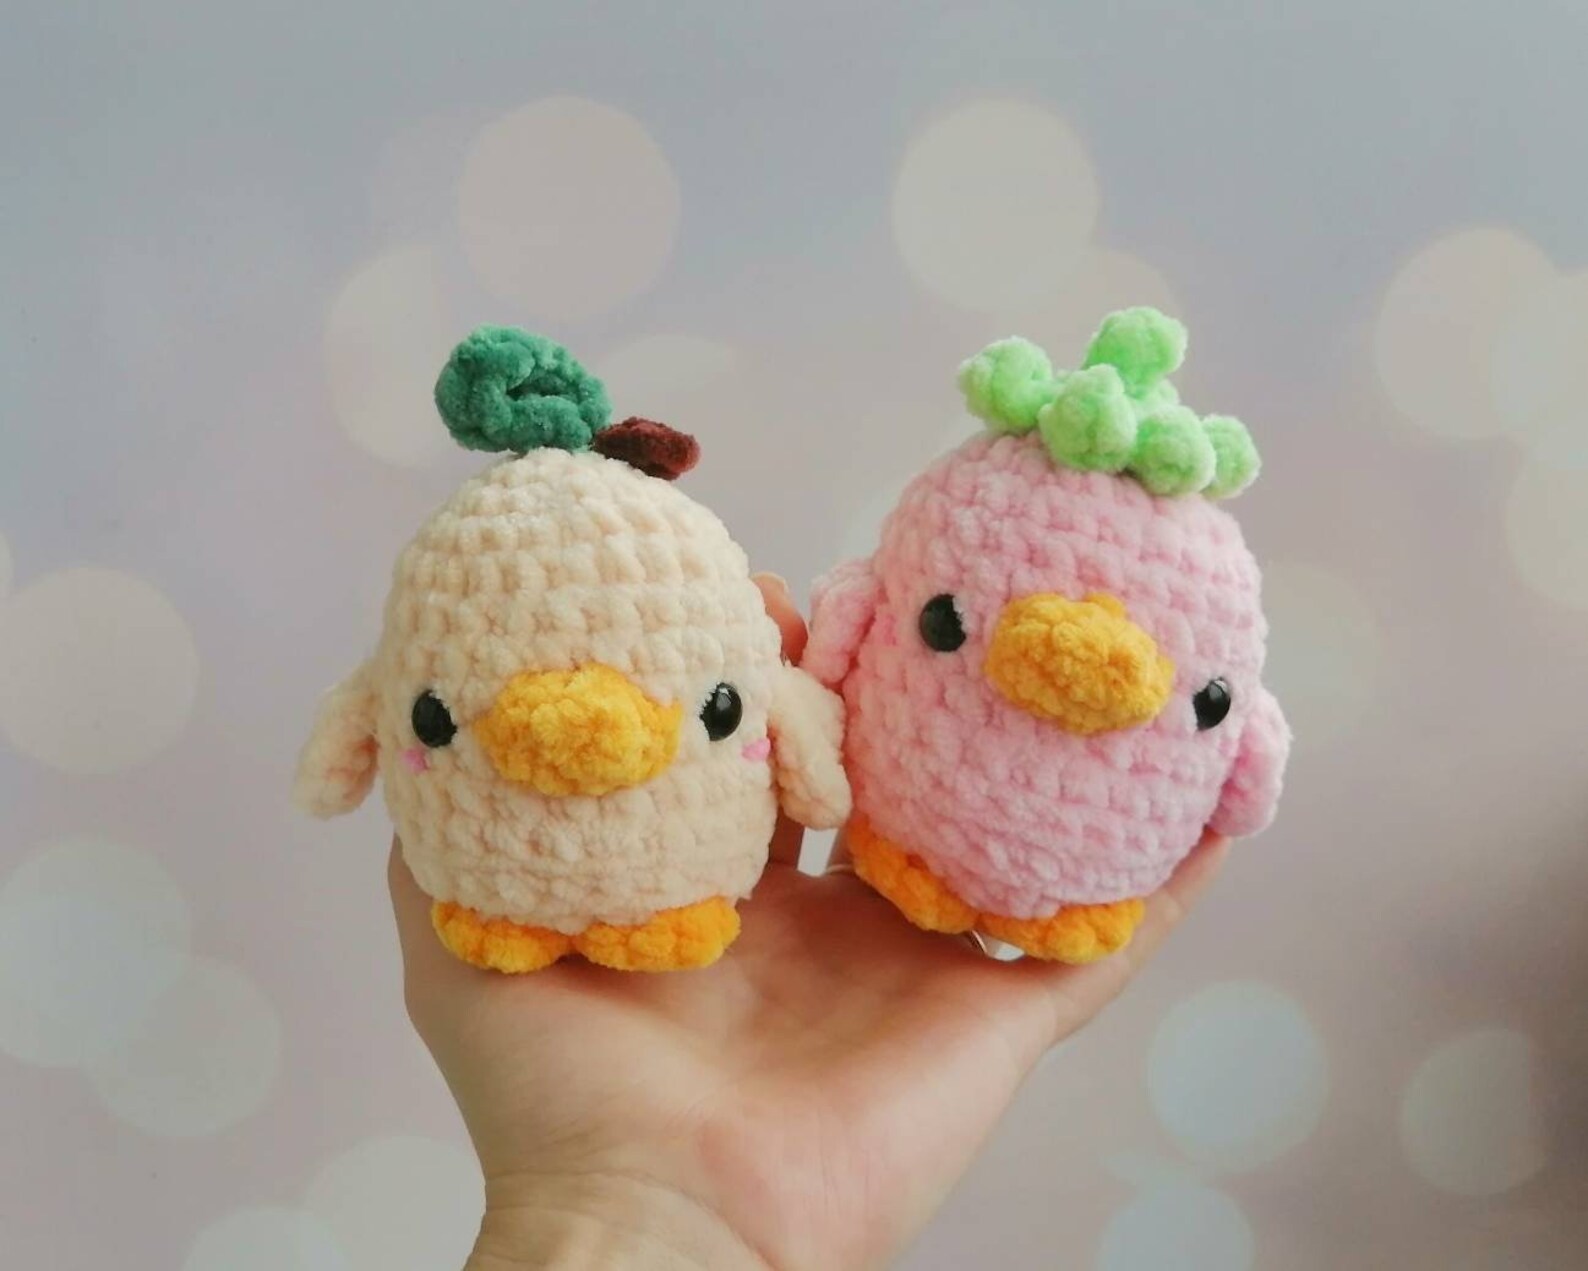 Crochet Duck Amigurumi Cute Chunky Plush Stuffed Animal Kawaii